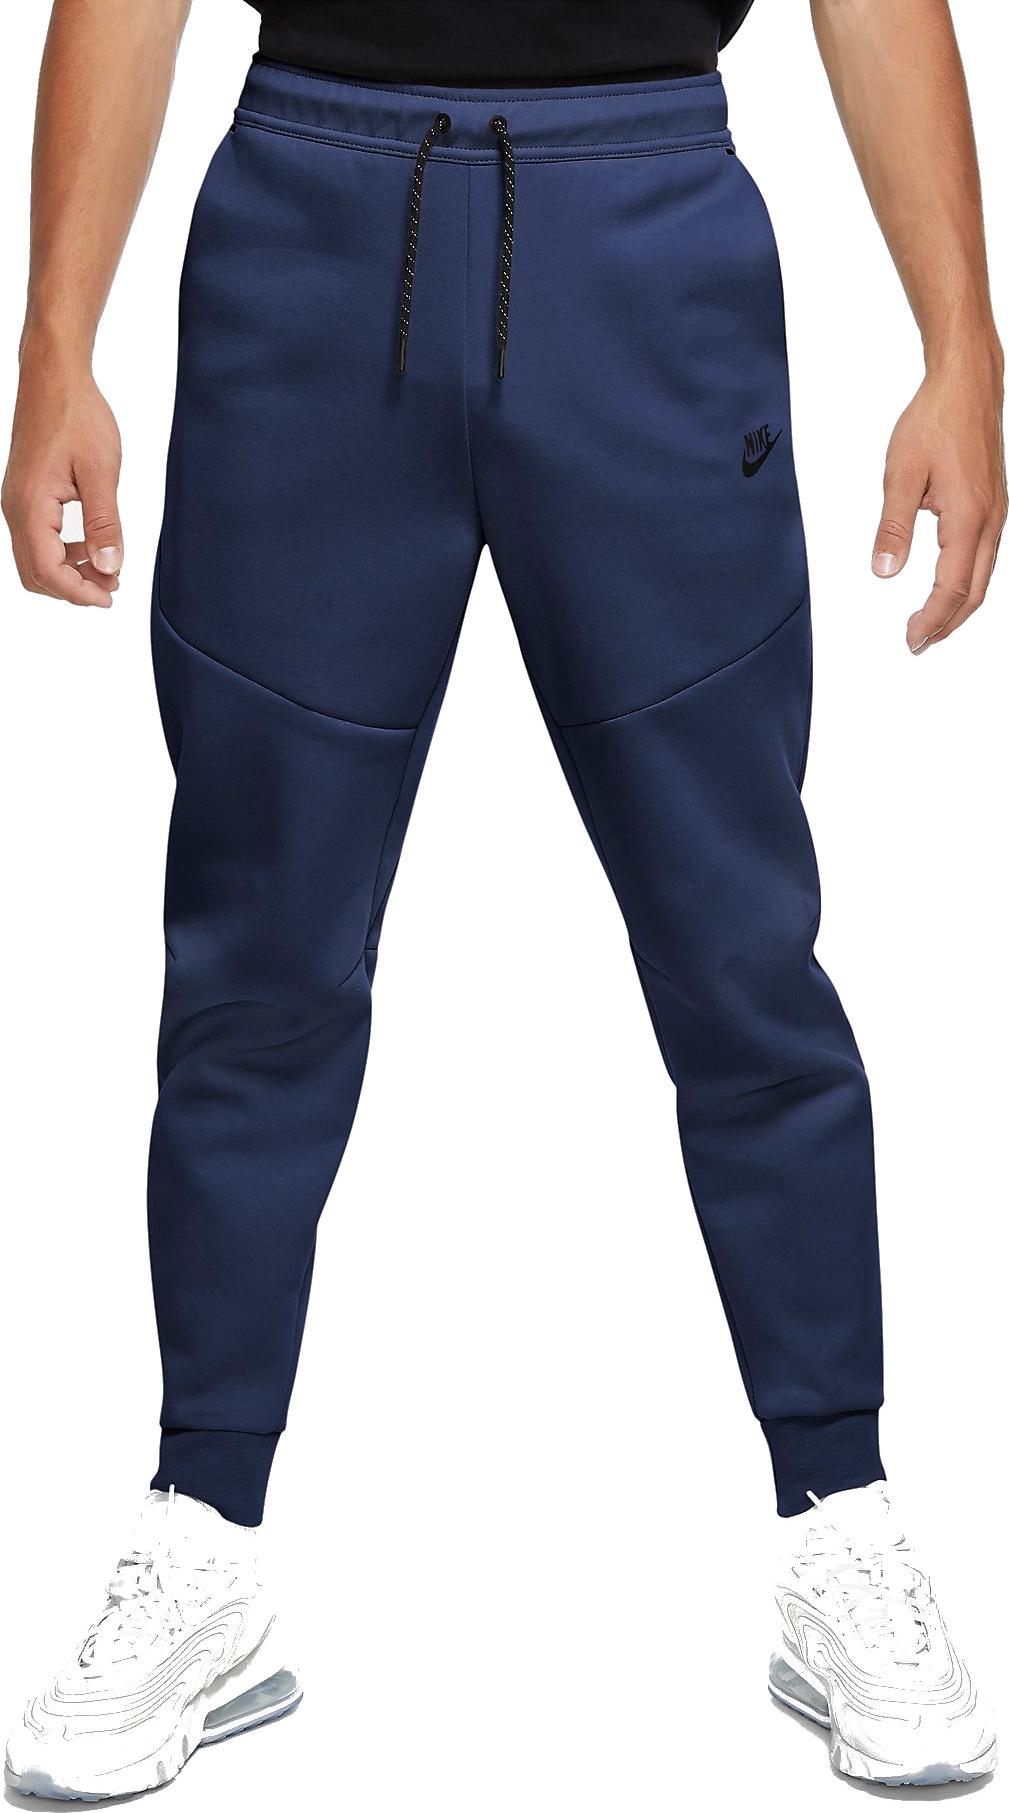 Nike Tech Fleece Men Blue Activewear Pants for Men for sale | eBay